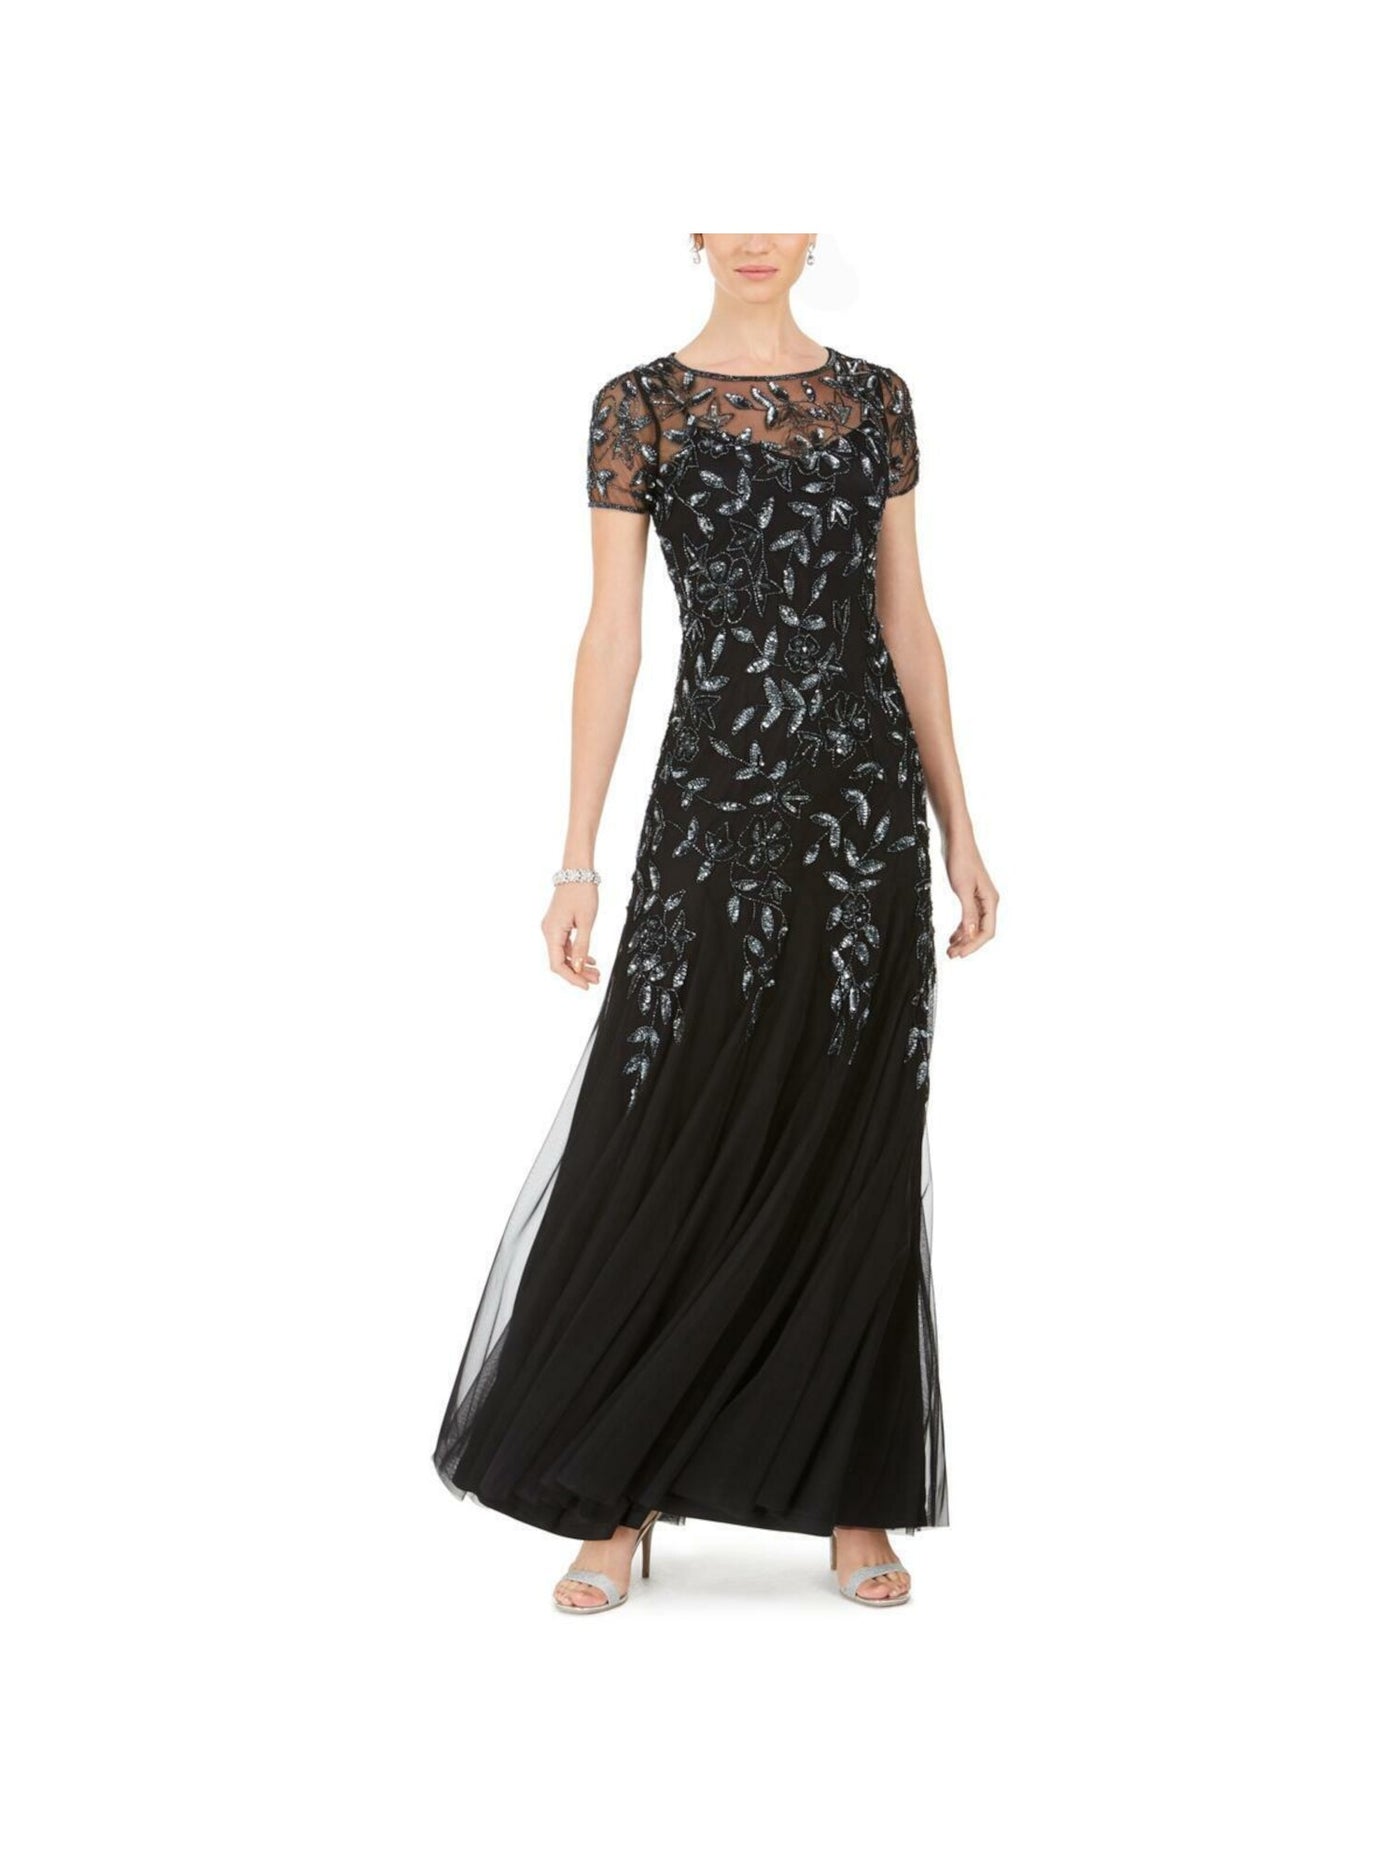 ADRIANNA PAPELL Womens Sequined Rhinestone Mesh Short Sleeve Illusion Neckline Full-Length Evening Fit + Flare Dress